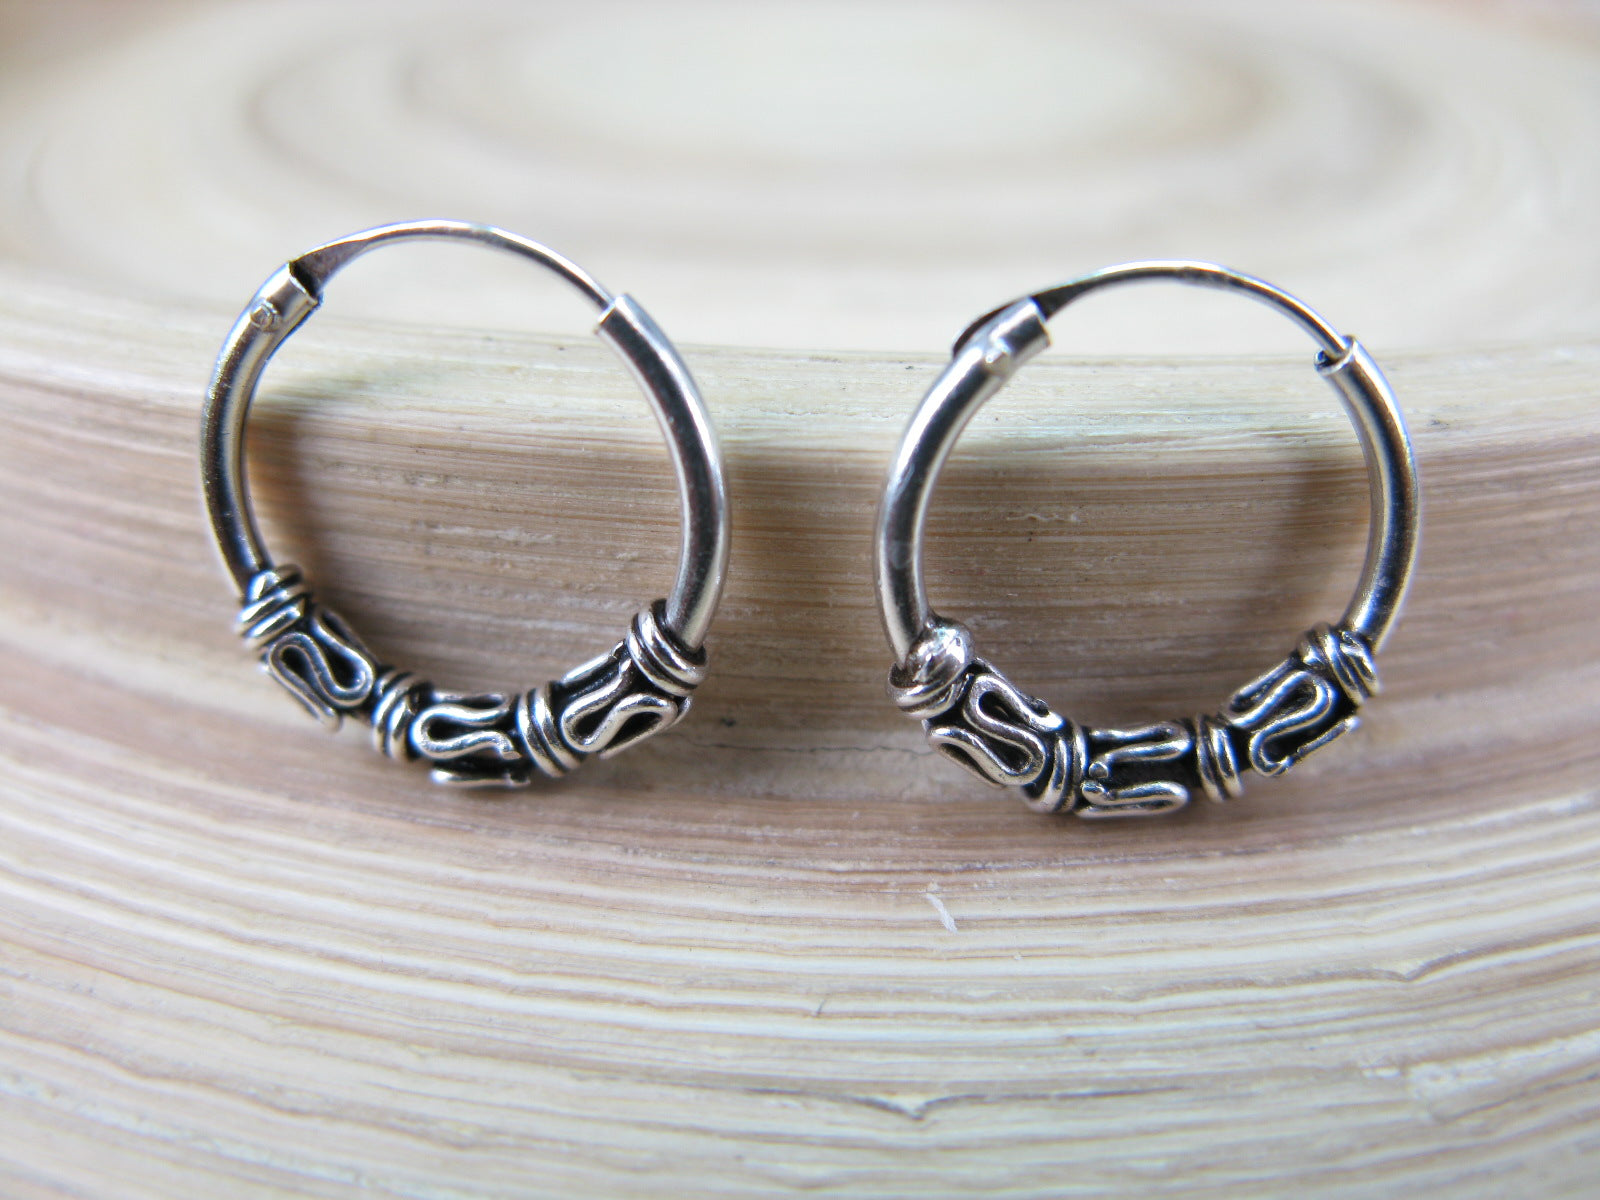 14mm Balinese Oxidized Hoop Earrings in 925 Sterling Silver